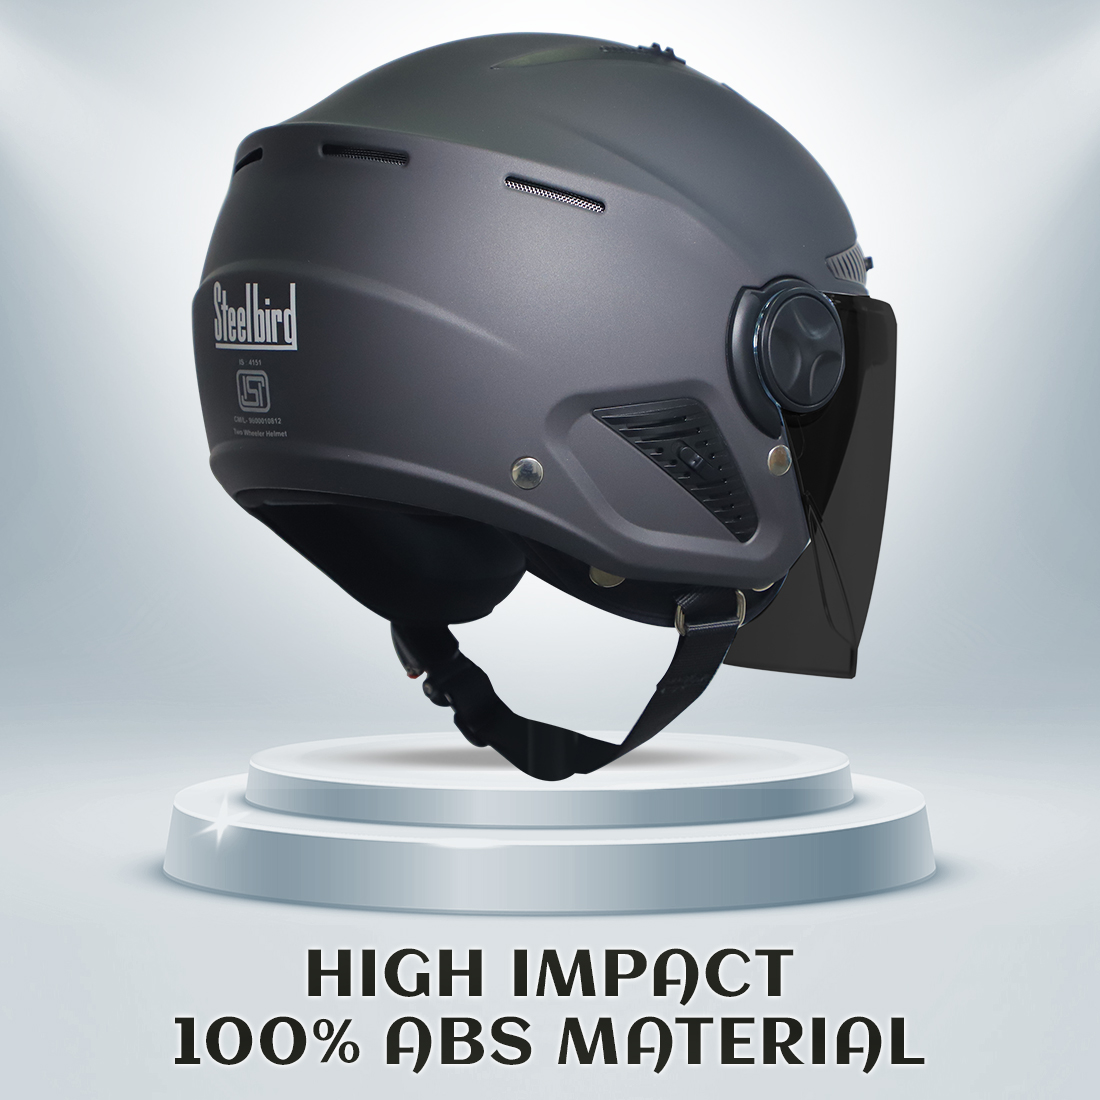 Steelbird SBH-24 Boxx ISI Certified Open Face Helmet For Men And Women (Matt H. Grey With Smoke Visor)